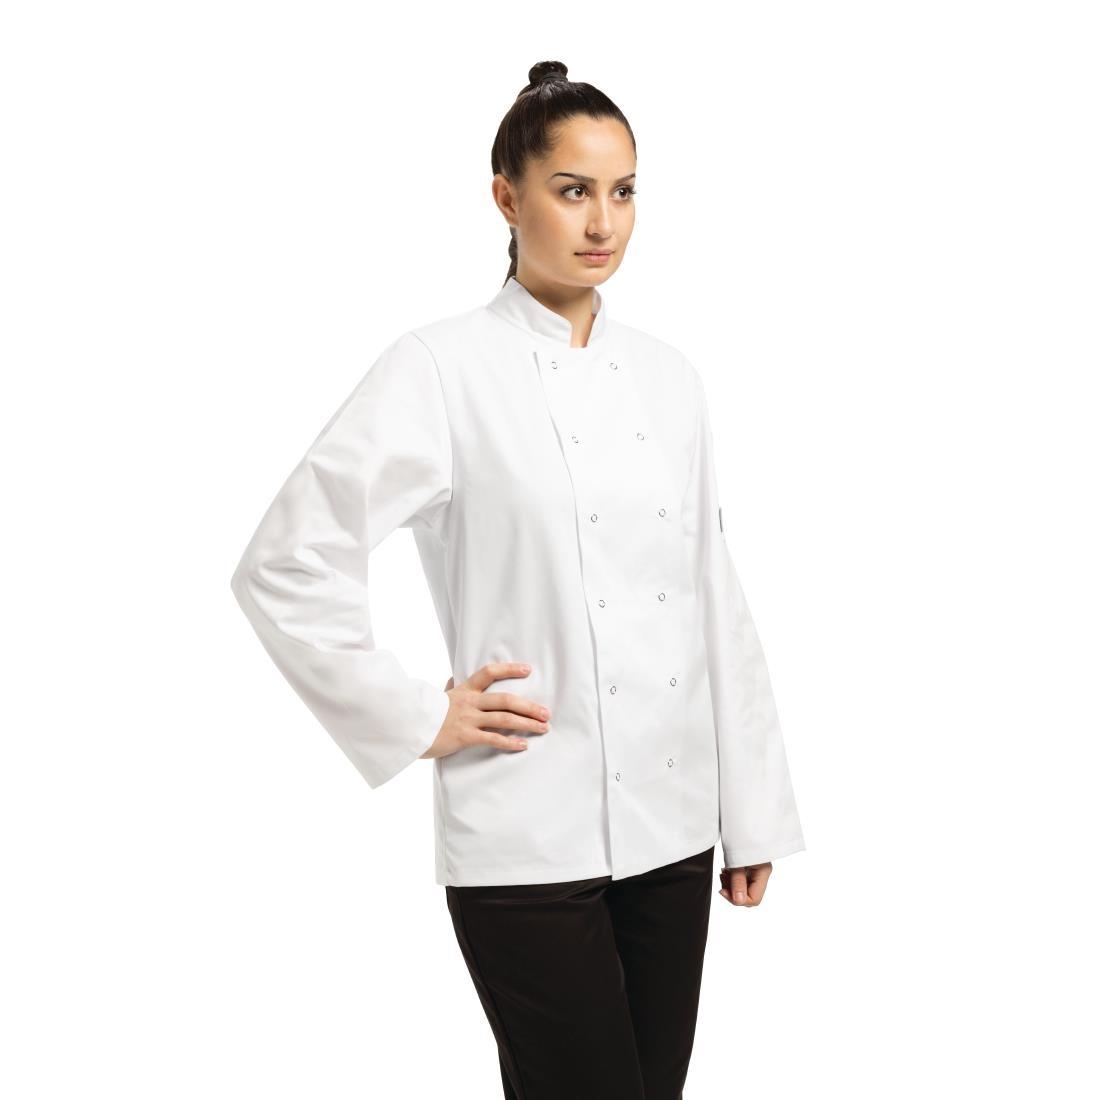 Whites Vegas Unisex Chefs Jacket Long Sleeve White L - A134-L  - 2